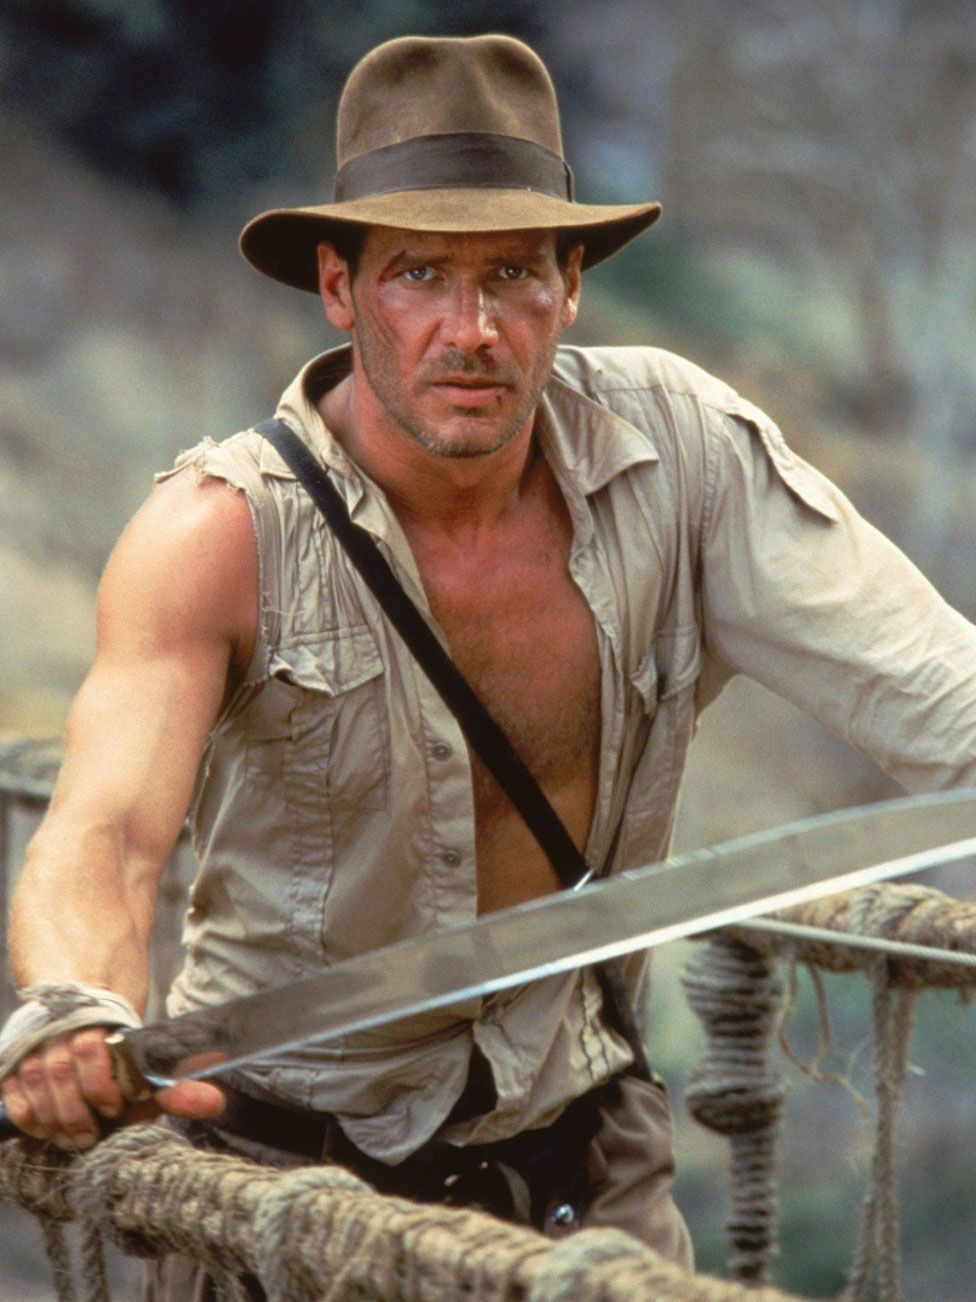 Terrell Yates Info: Indiana Jones 5 Cast Ke Huy Quan